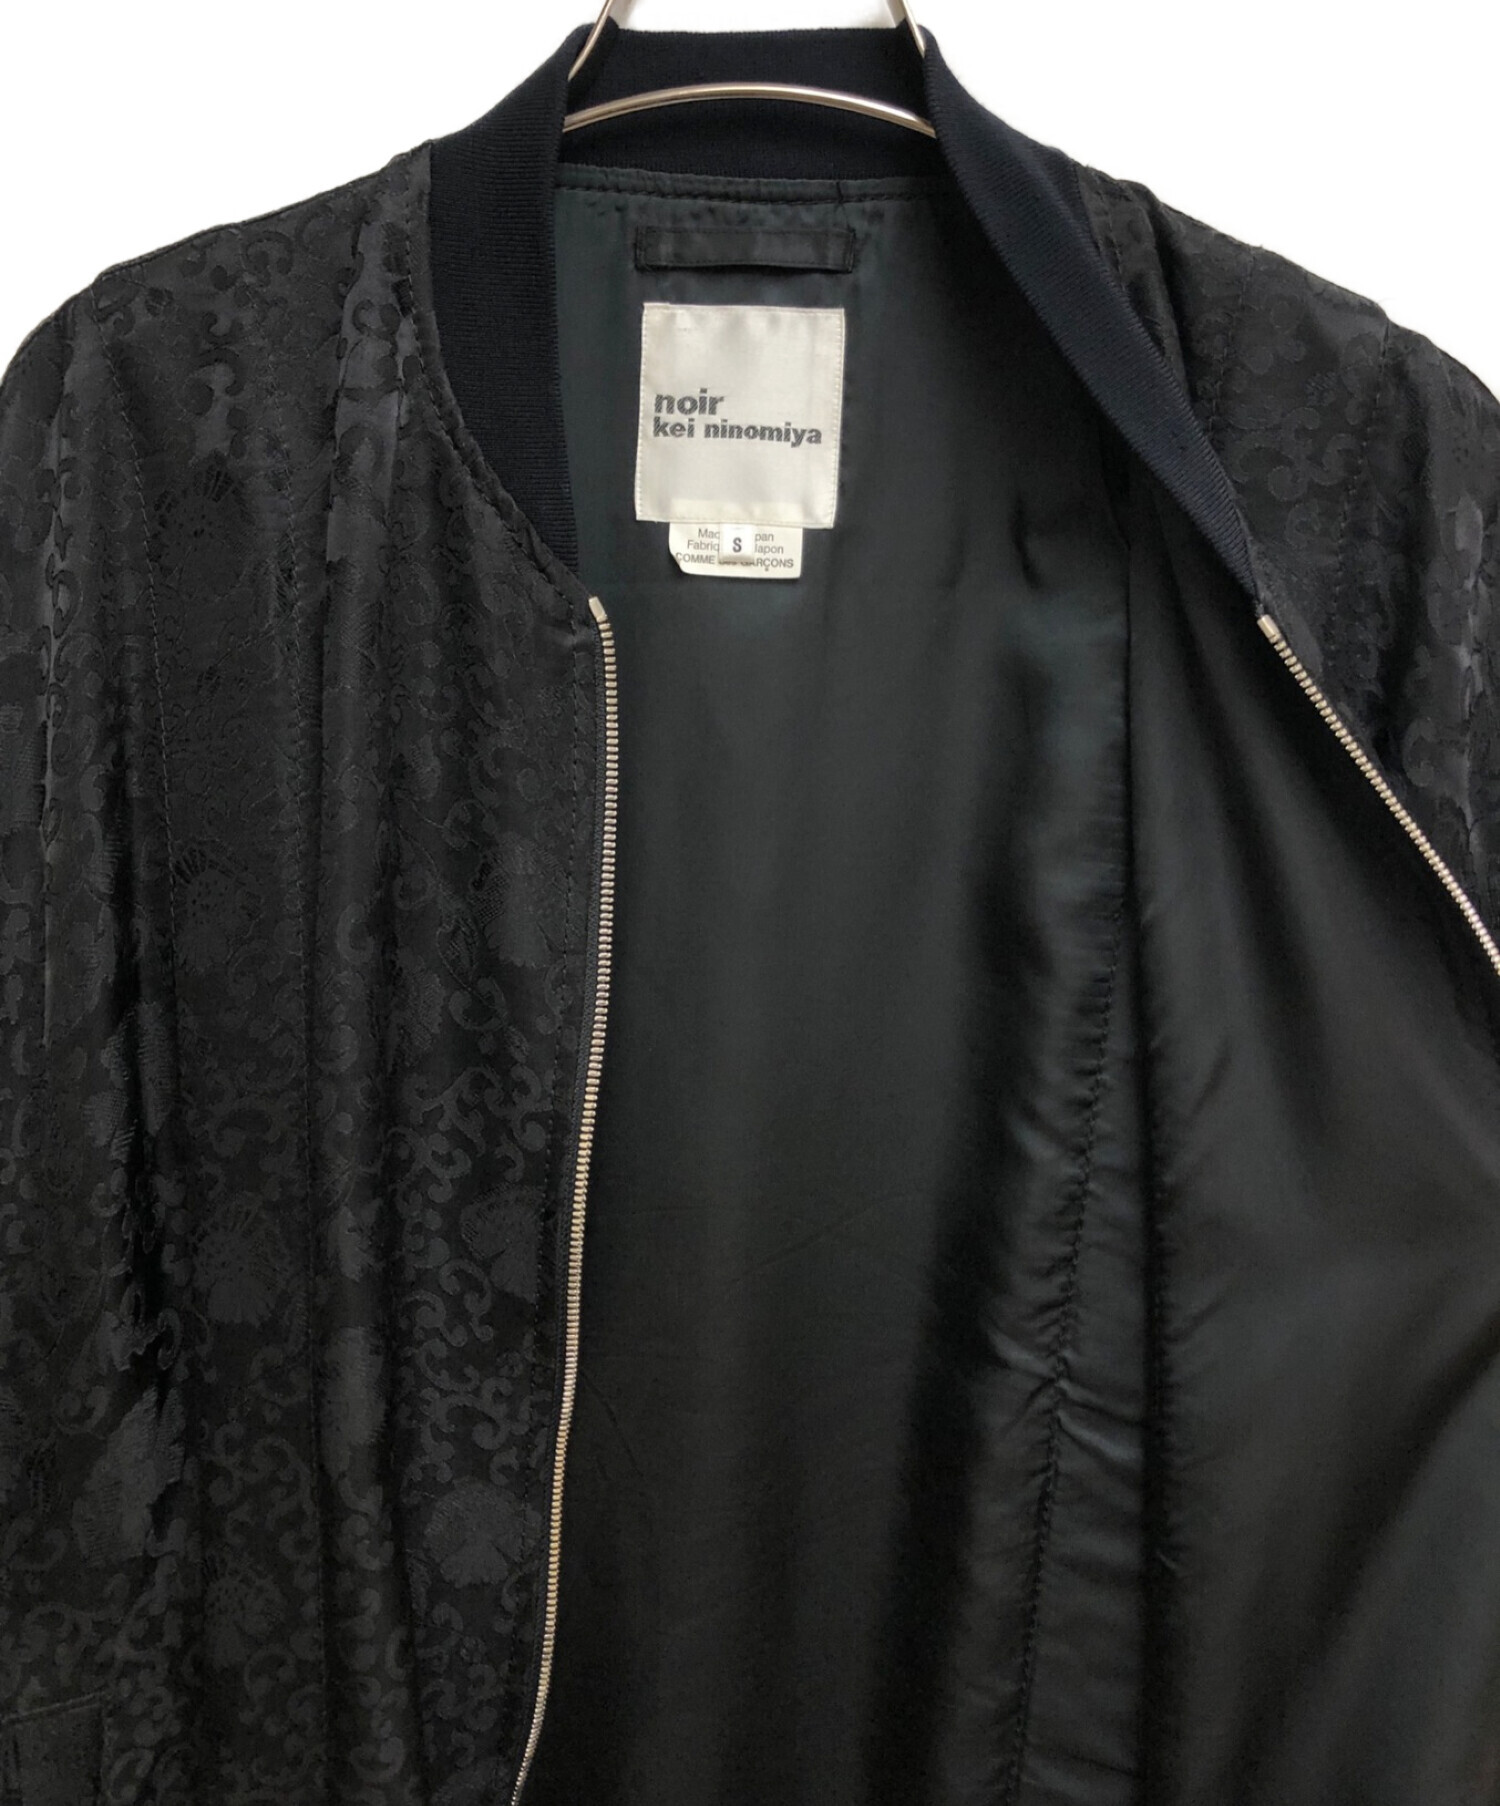 noir kei ninomiya (ノワール ケイ ニノミヤ) ロングMA-1ジャケット ブラック サイズ:S